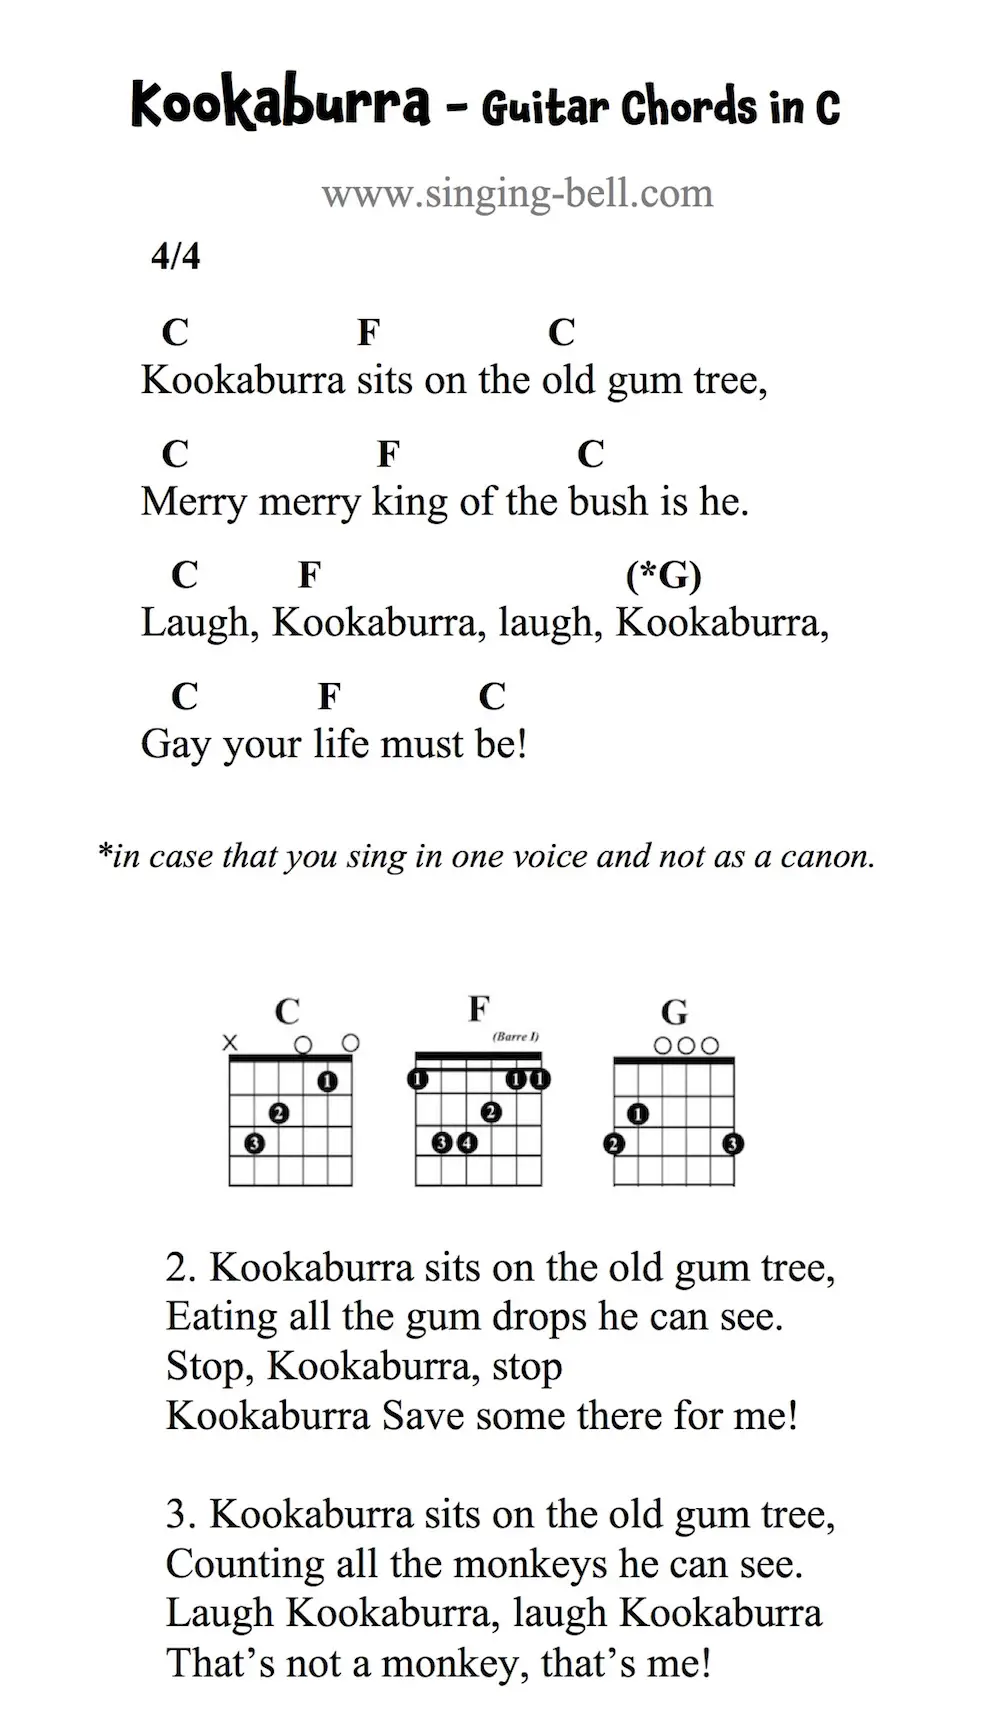 Kookaburra - Guitar Chords and Tabs in C.